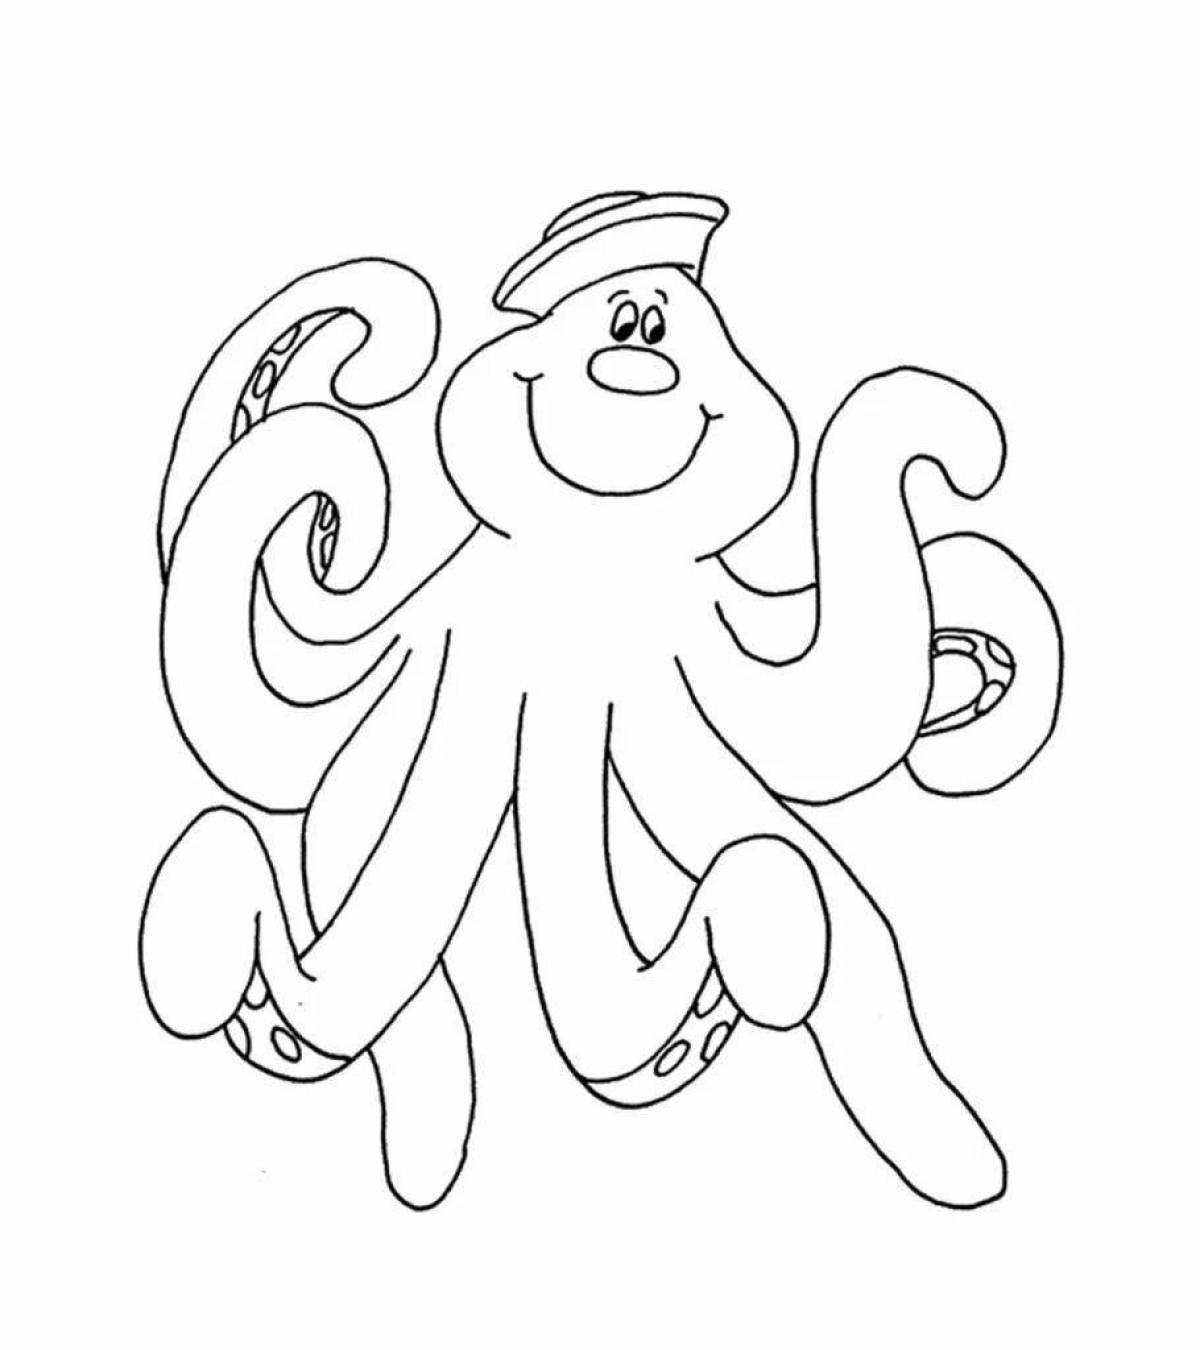 Octopus fun coloring book for kids